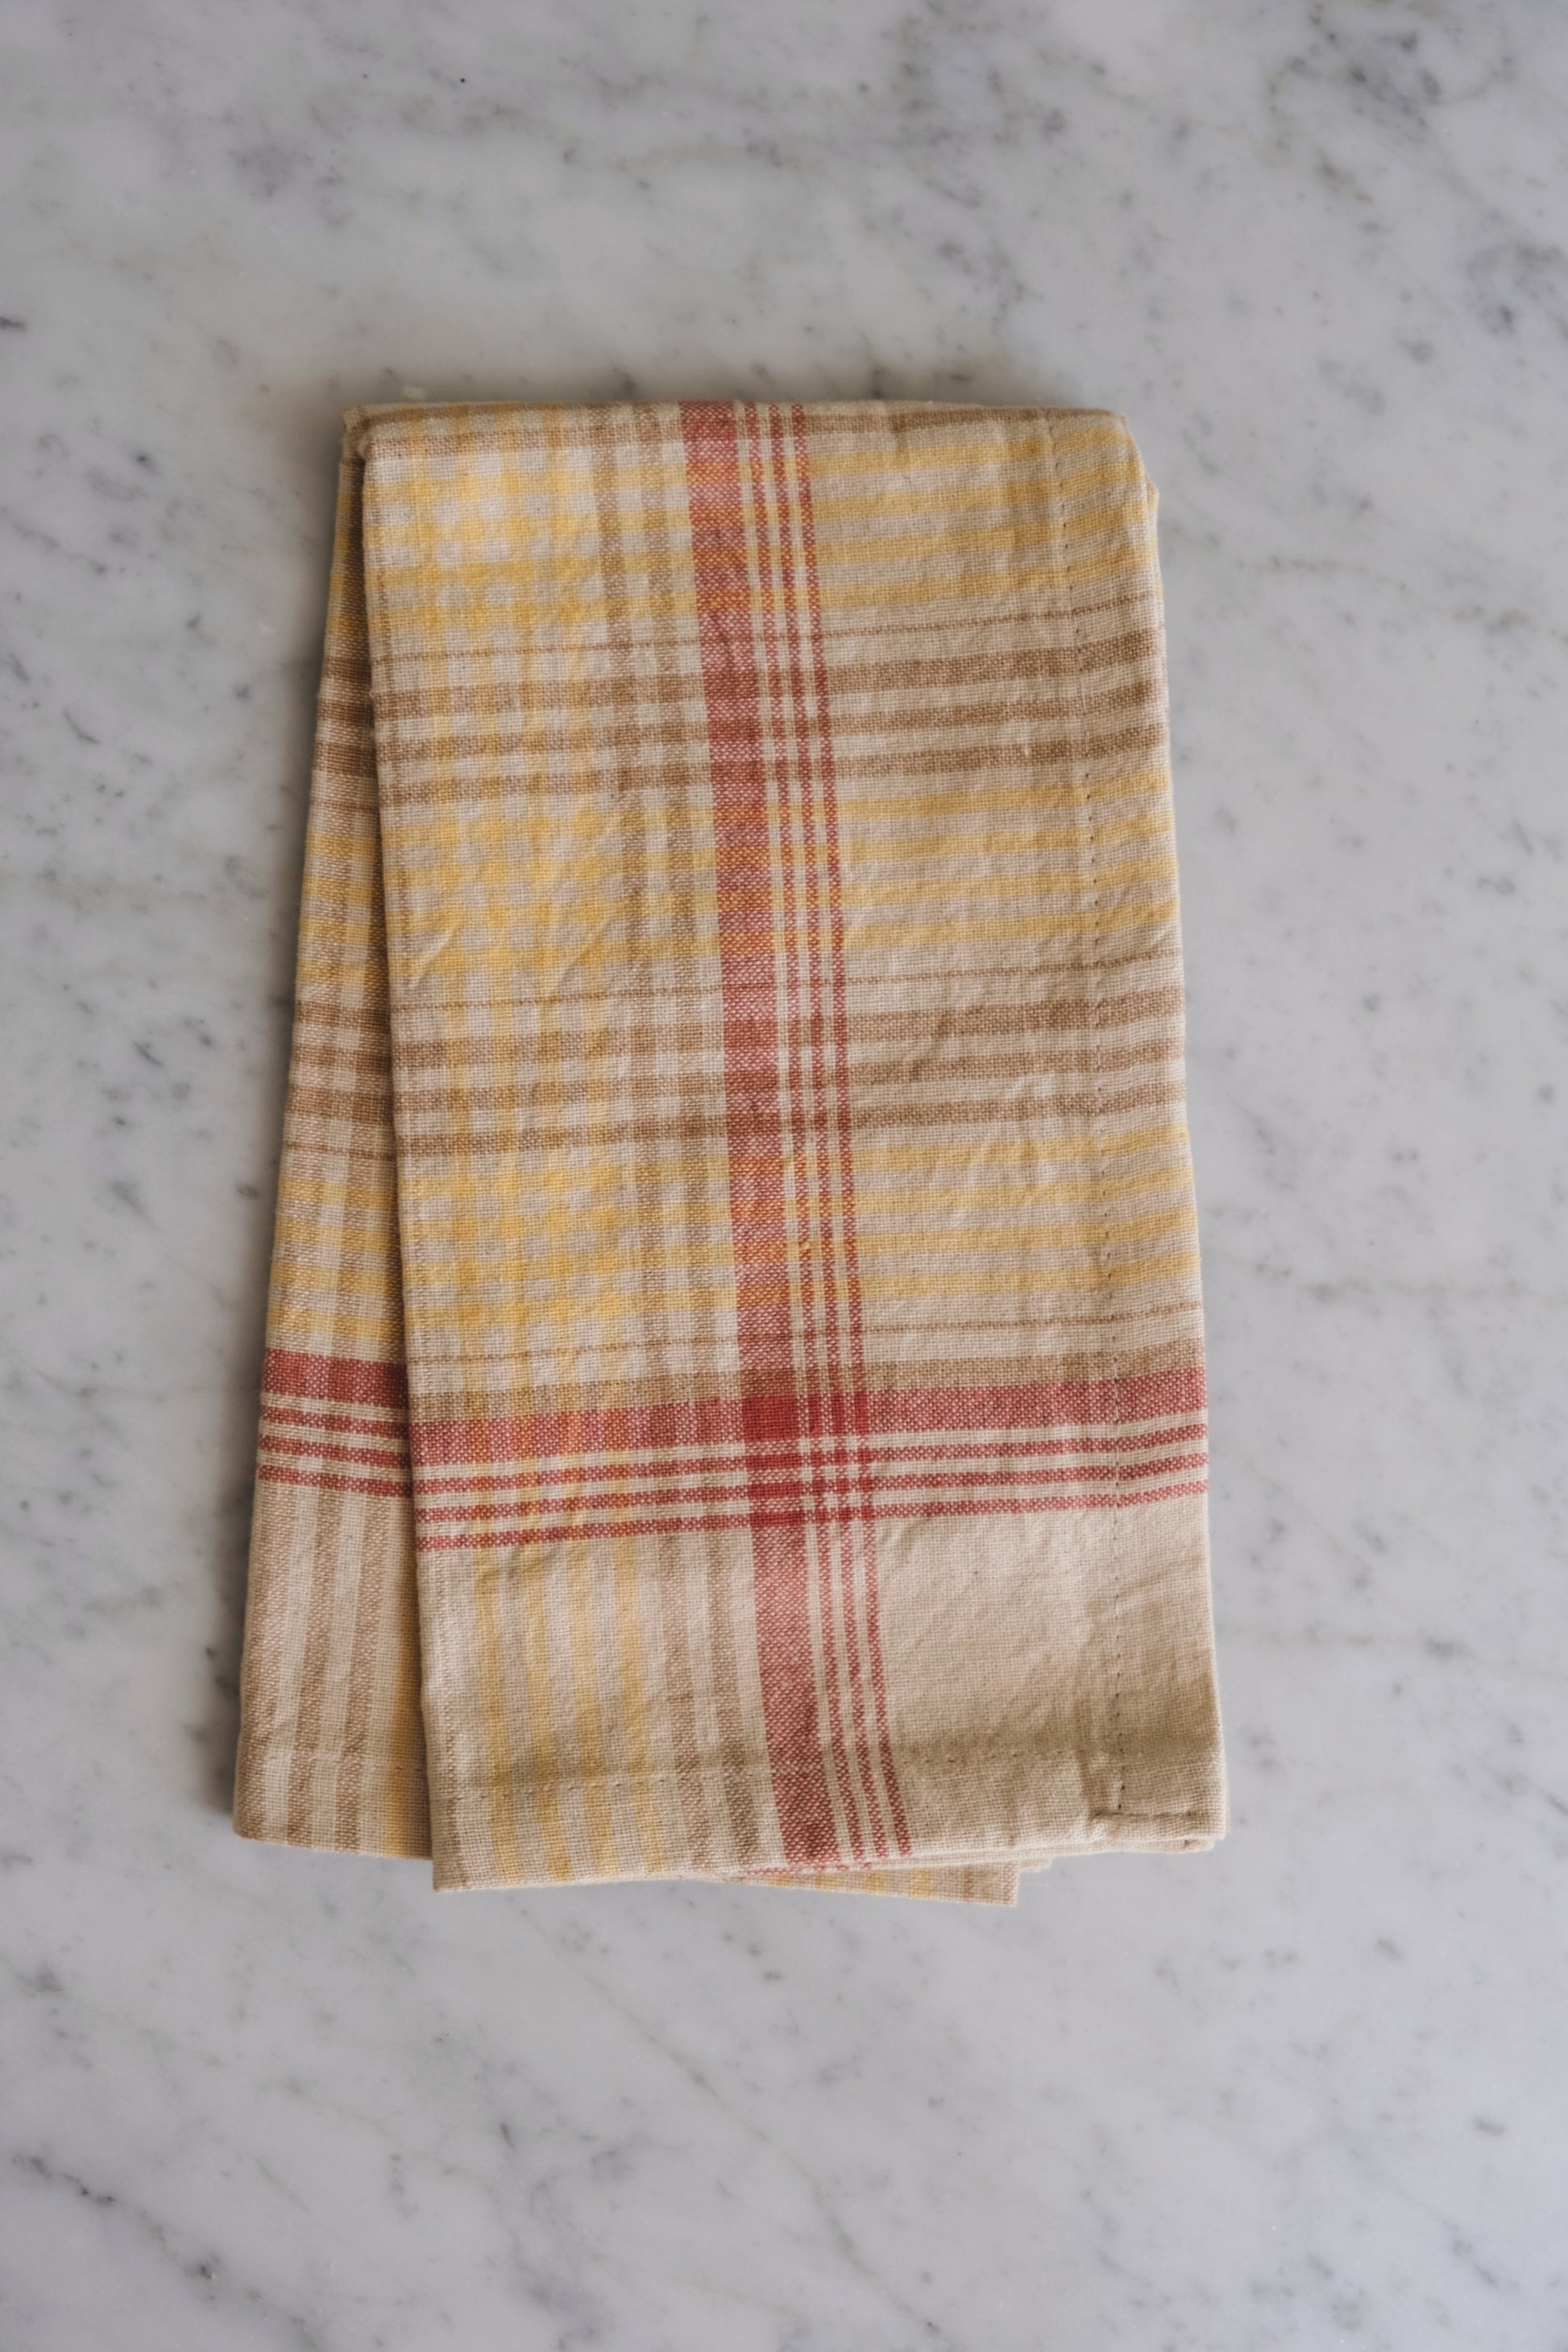 iToolai Red & White Checkered Kitchen Tea Towels, 100% Woven Cotton  Washable Dish Cloth(Set of 4,Medium)